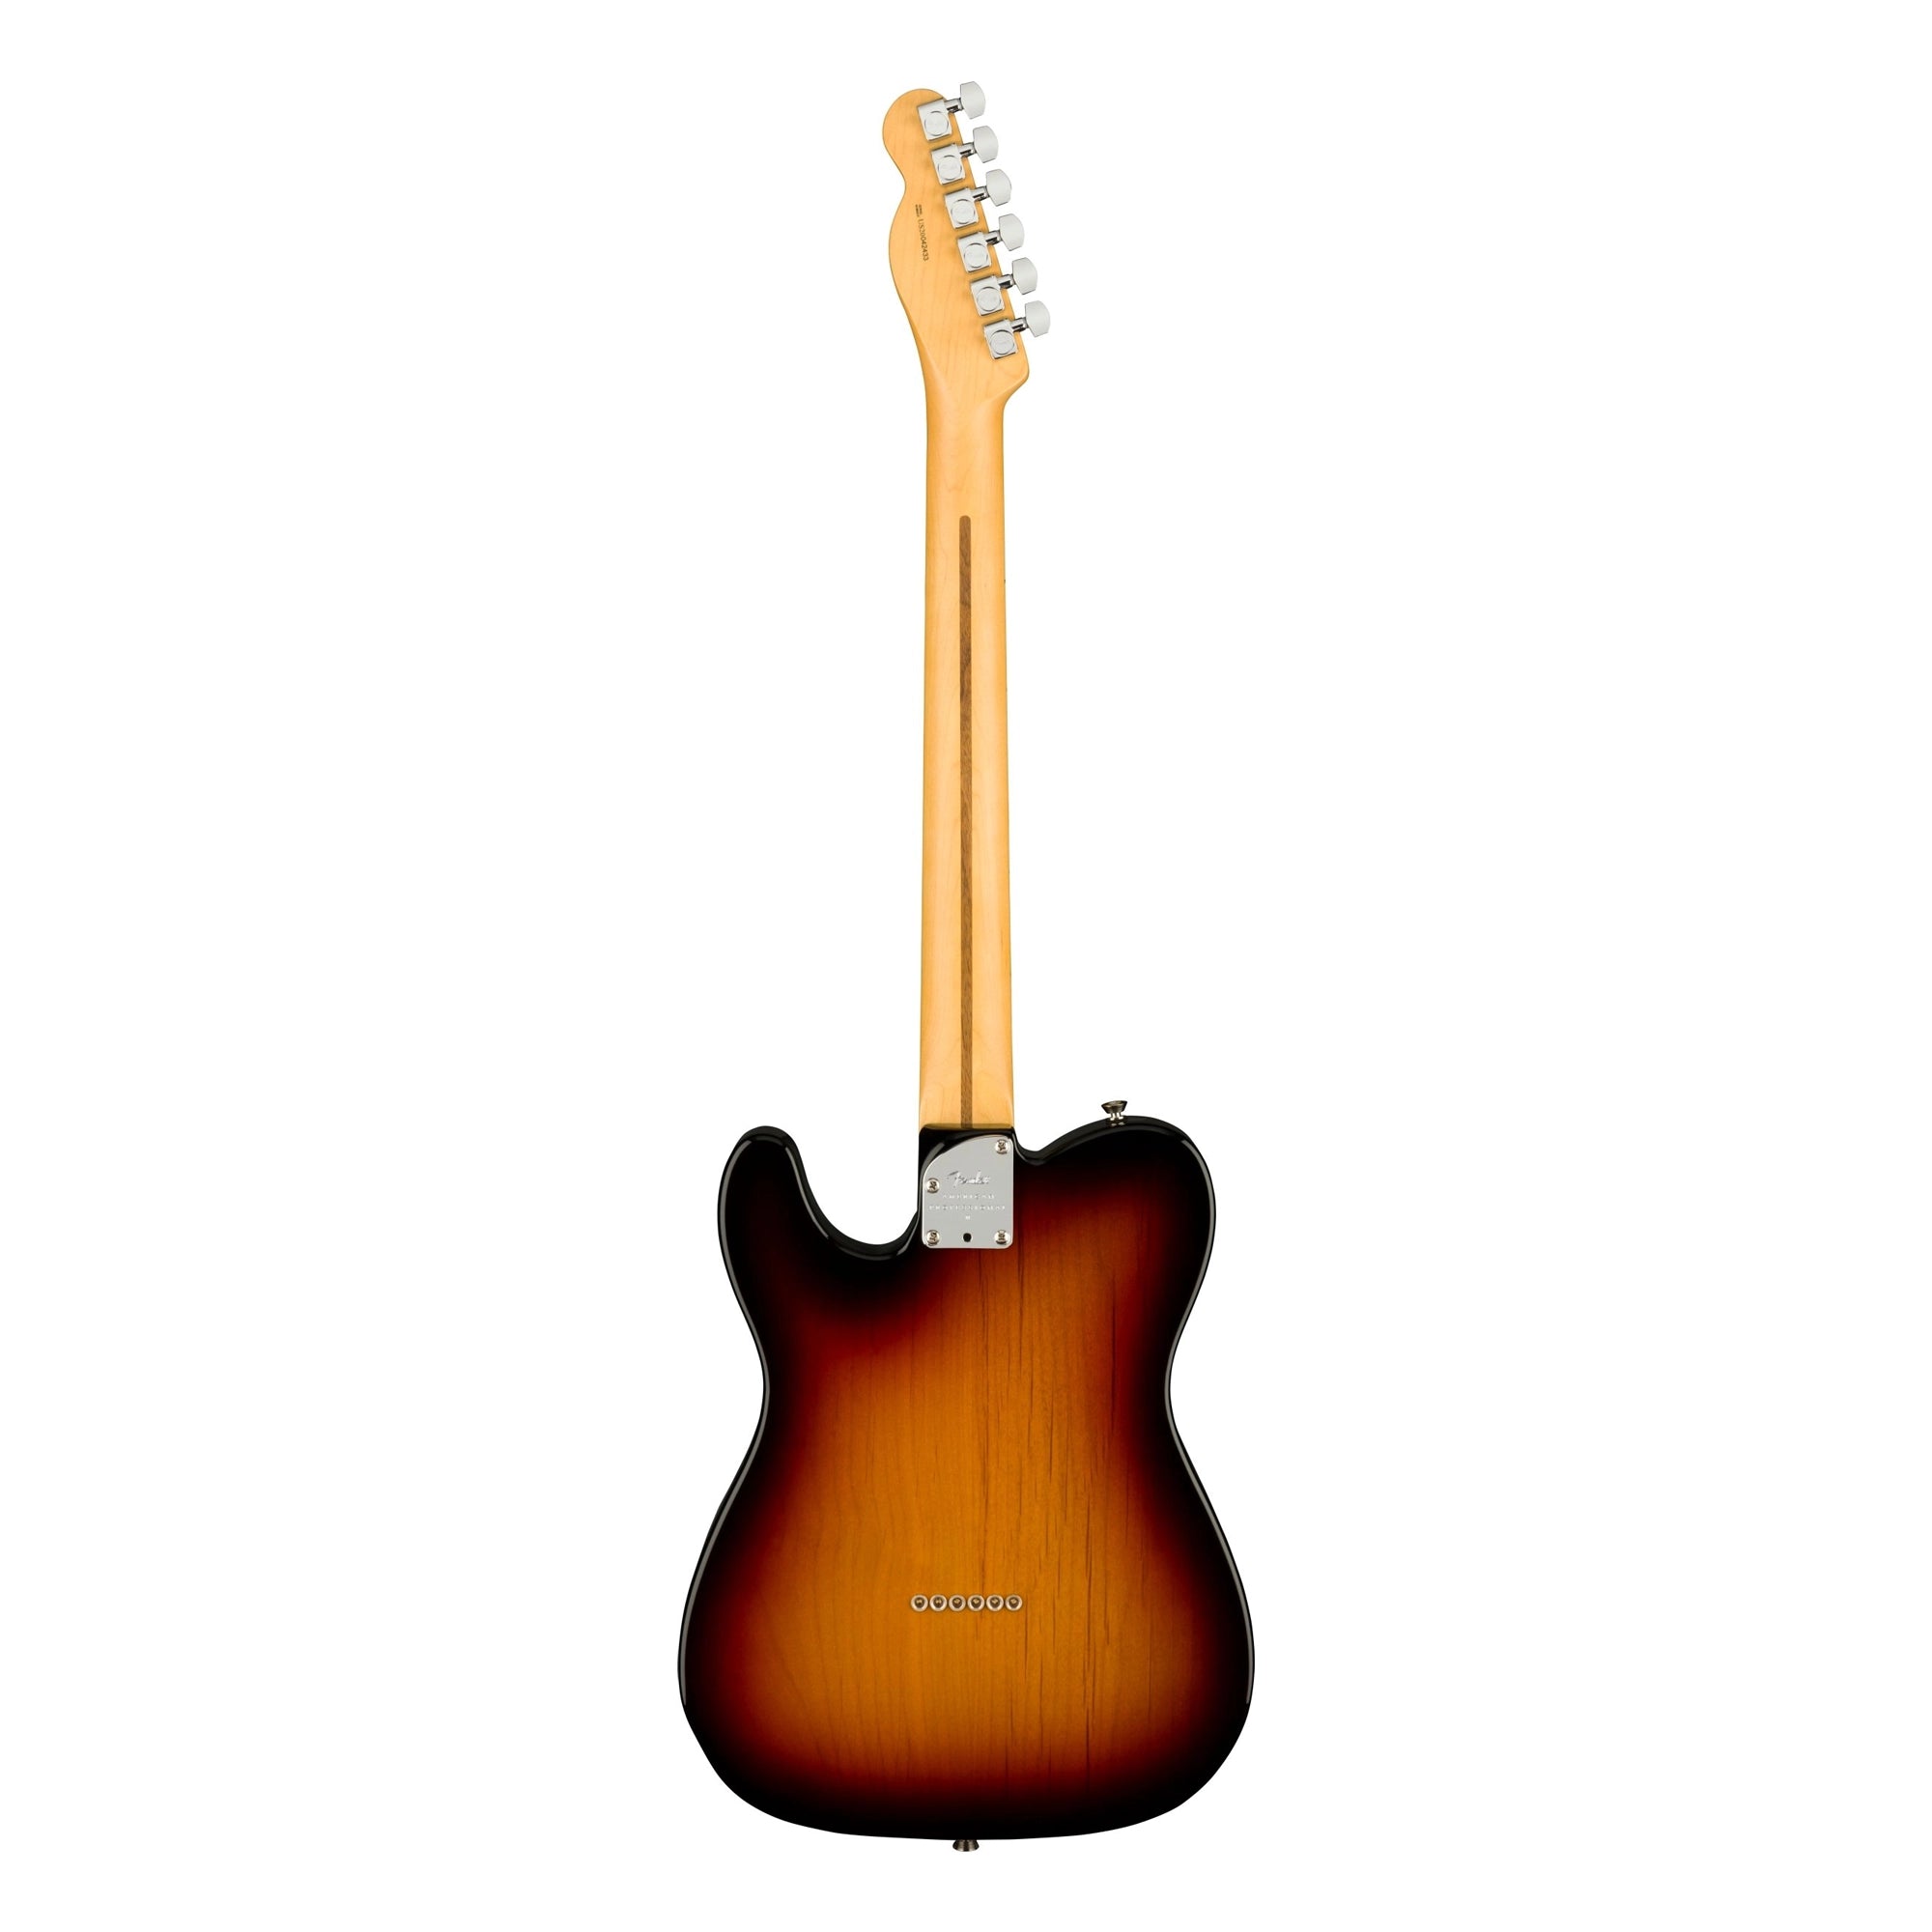 Fender American Professional II Telecaster Maple Fingerboard Electric Guitar 3-Color Sunburst